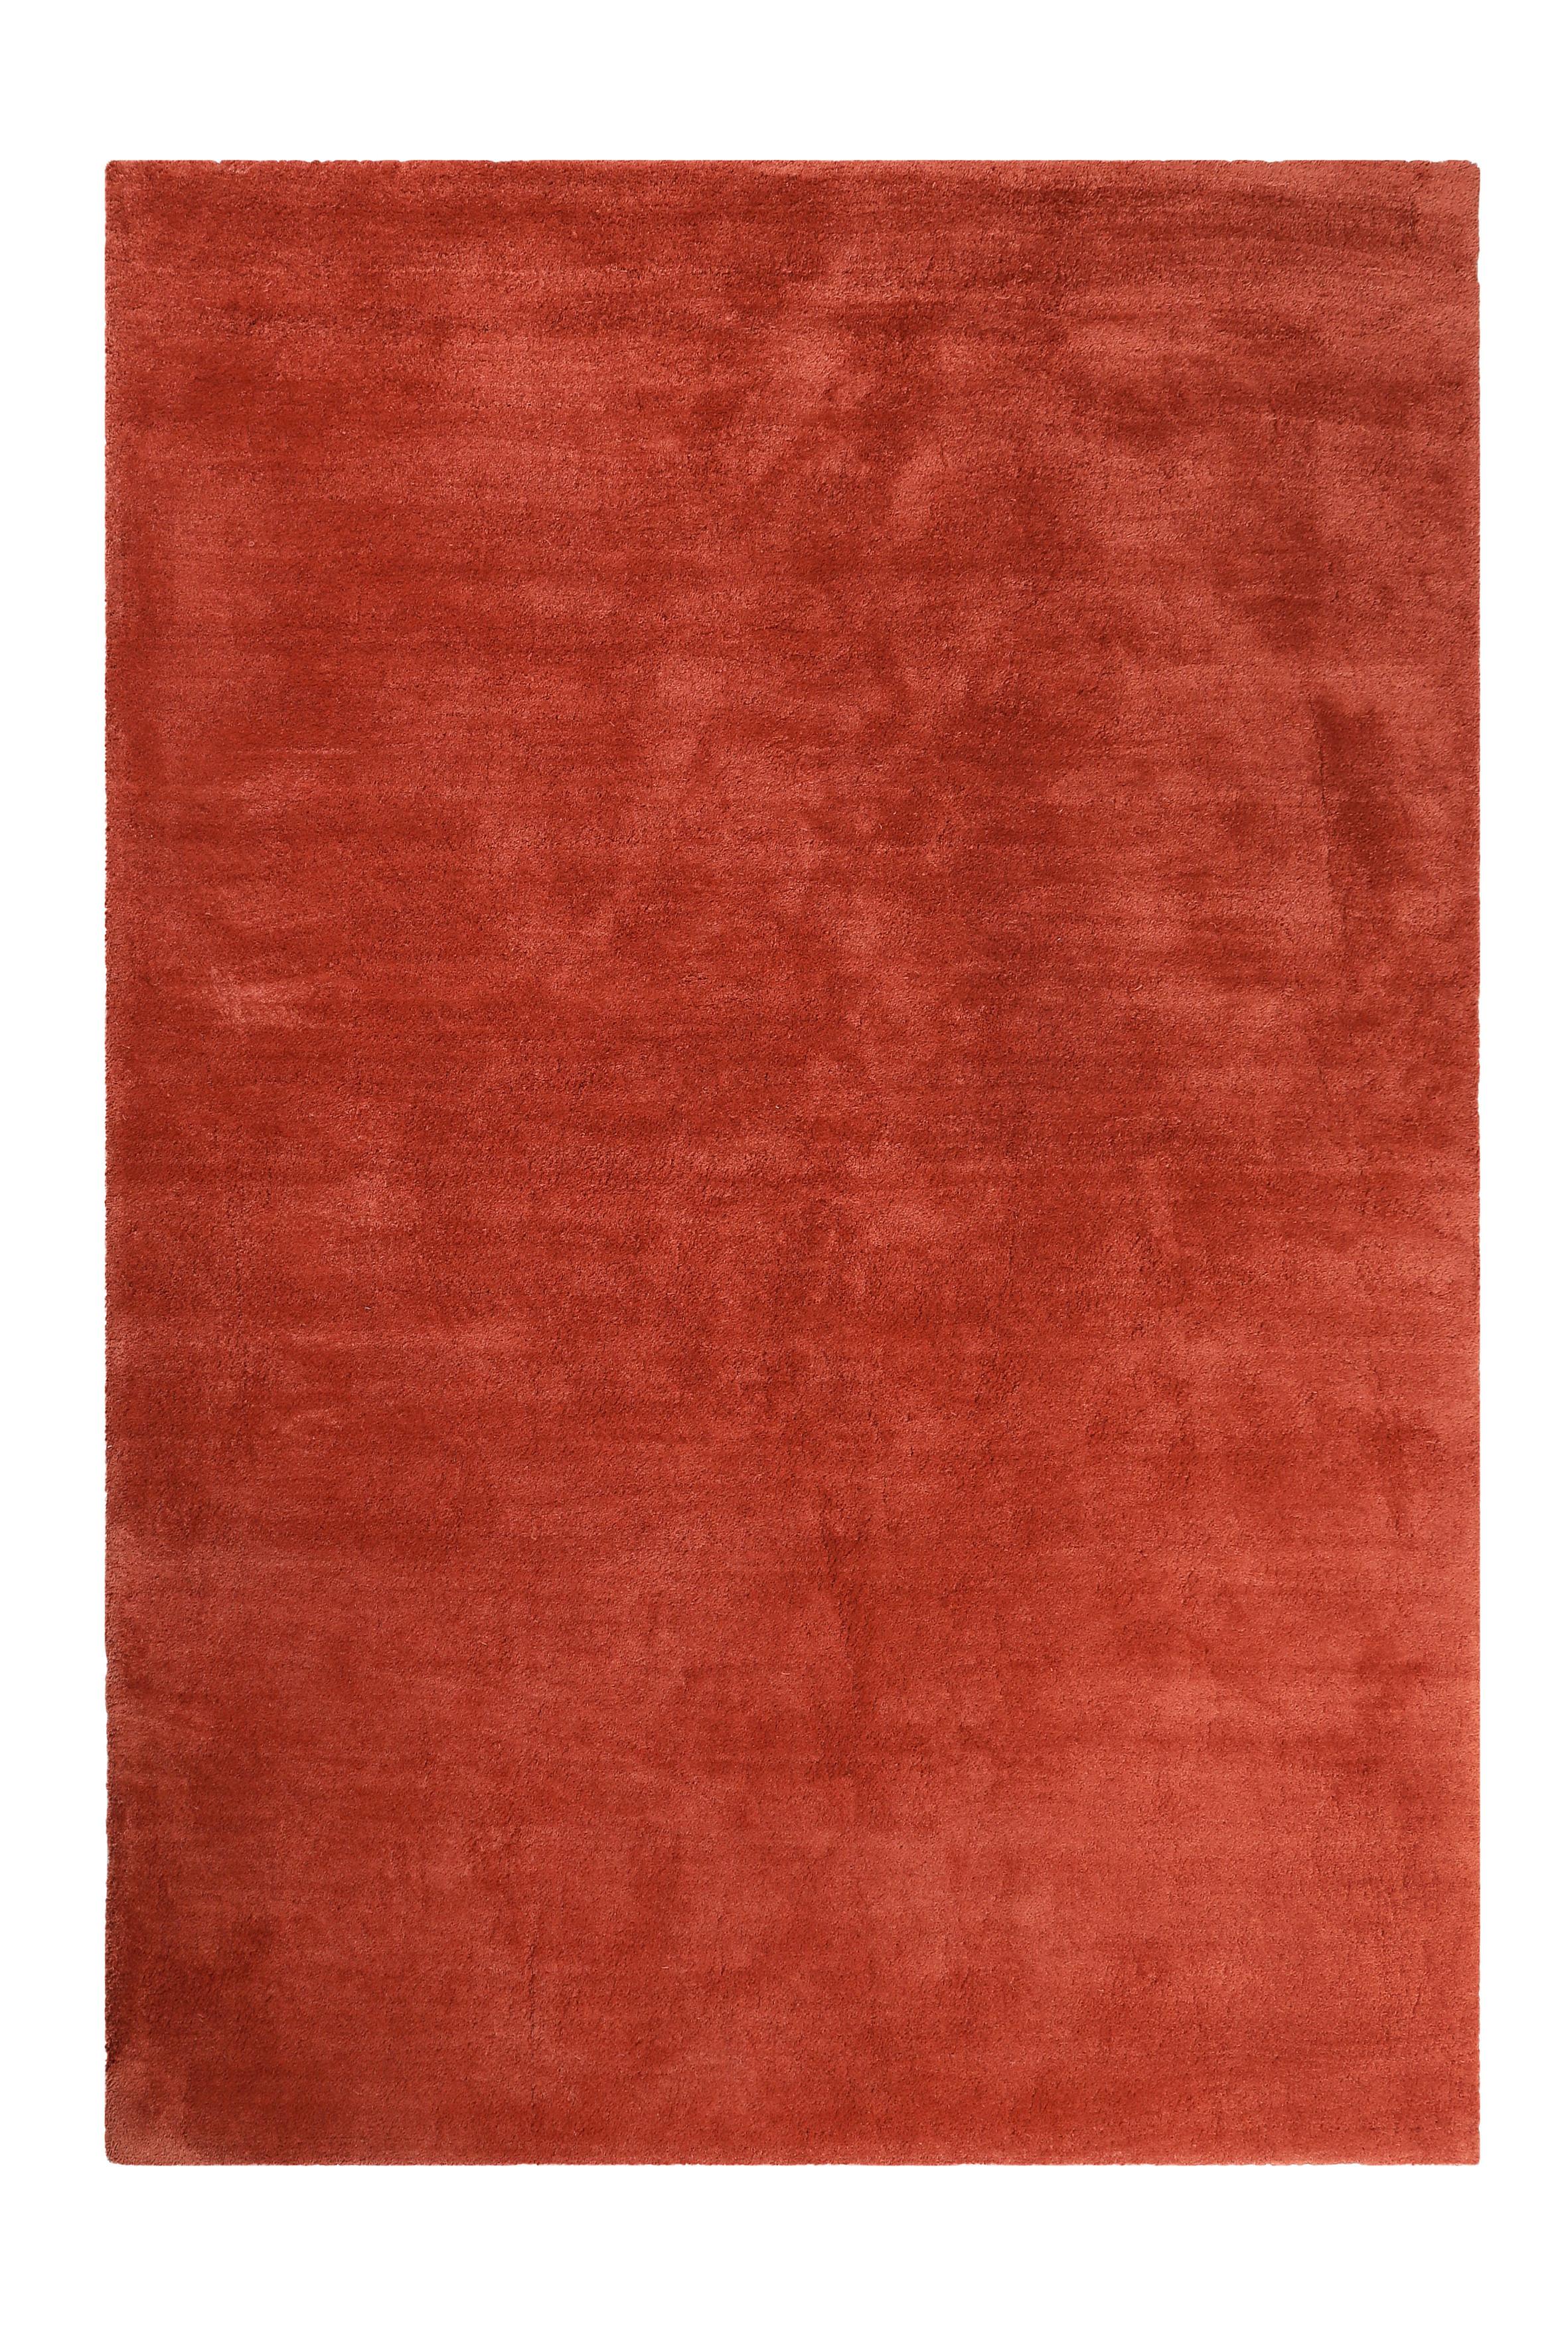 Hochflor Teppich Rot Loft 70x140 cm - Rot, Basics, Textil (70/140cm) - Esprit